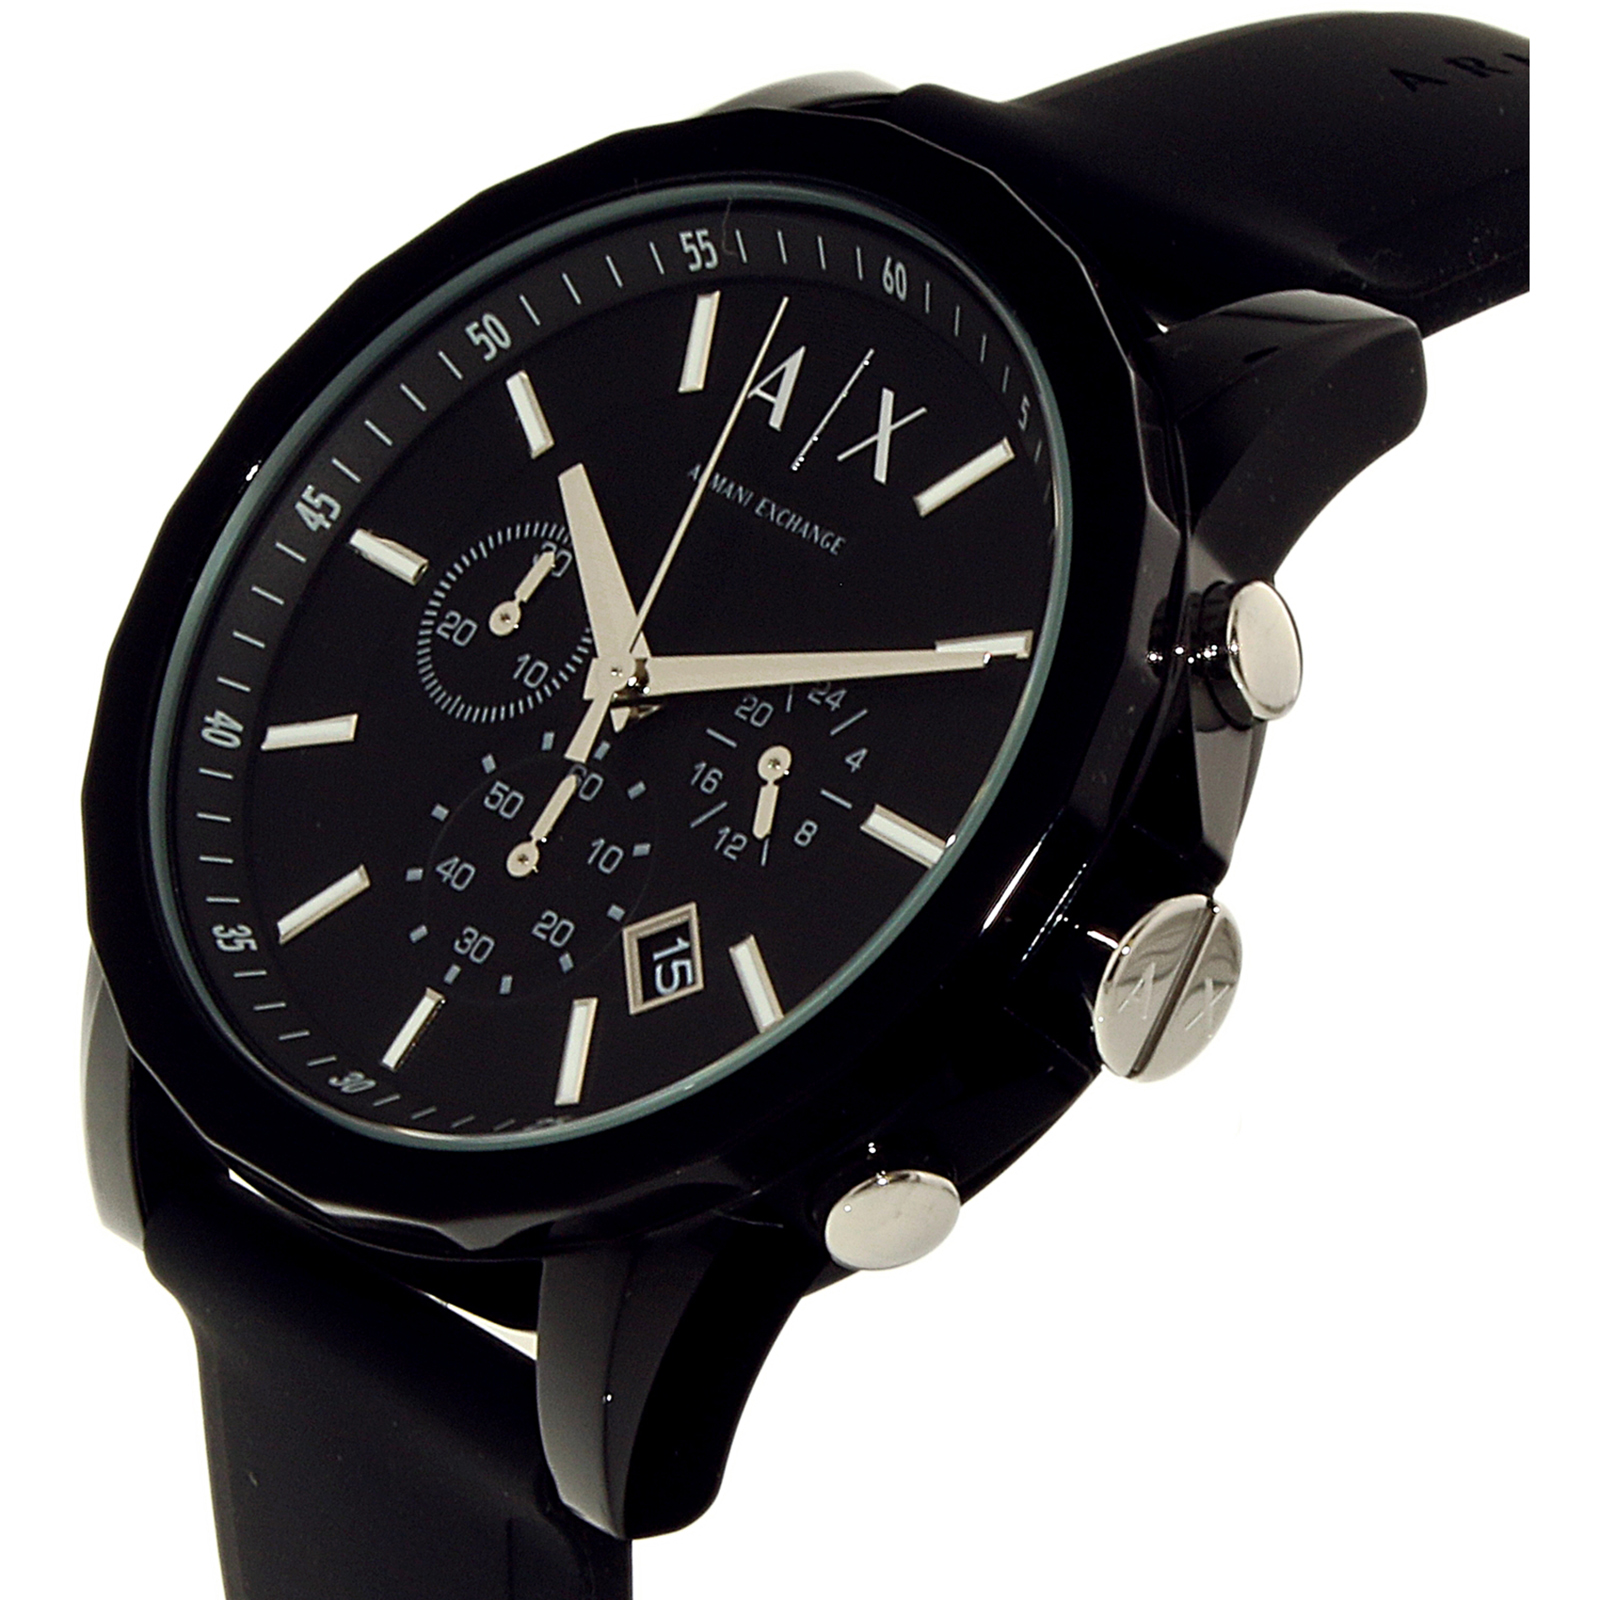 ax1326 watch